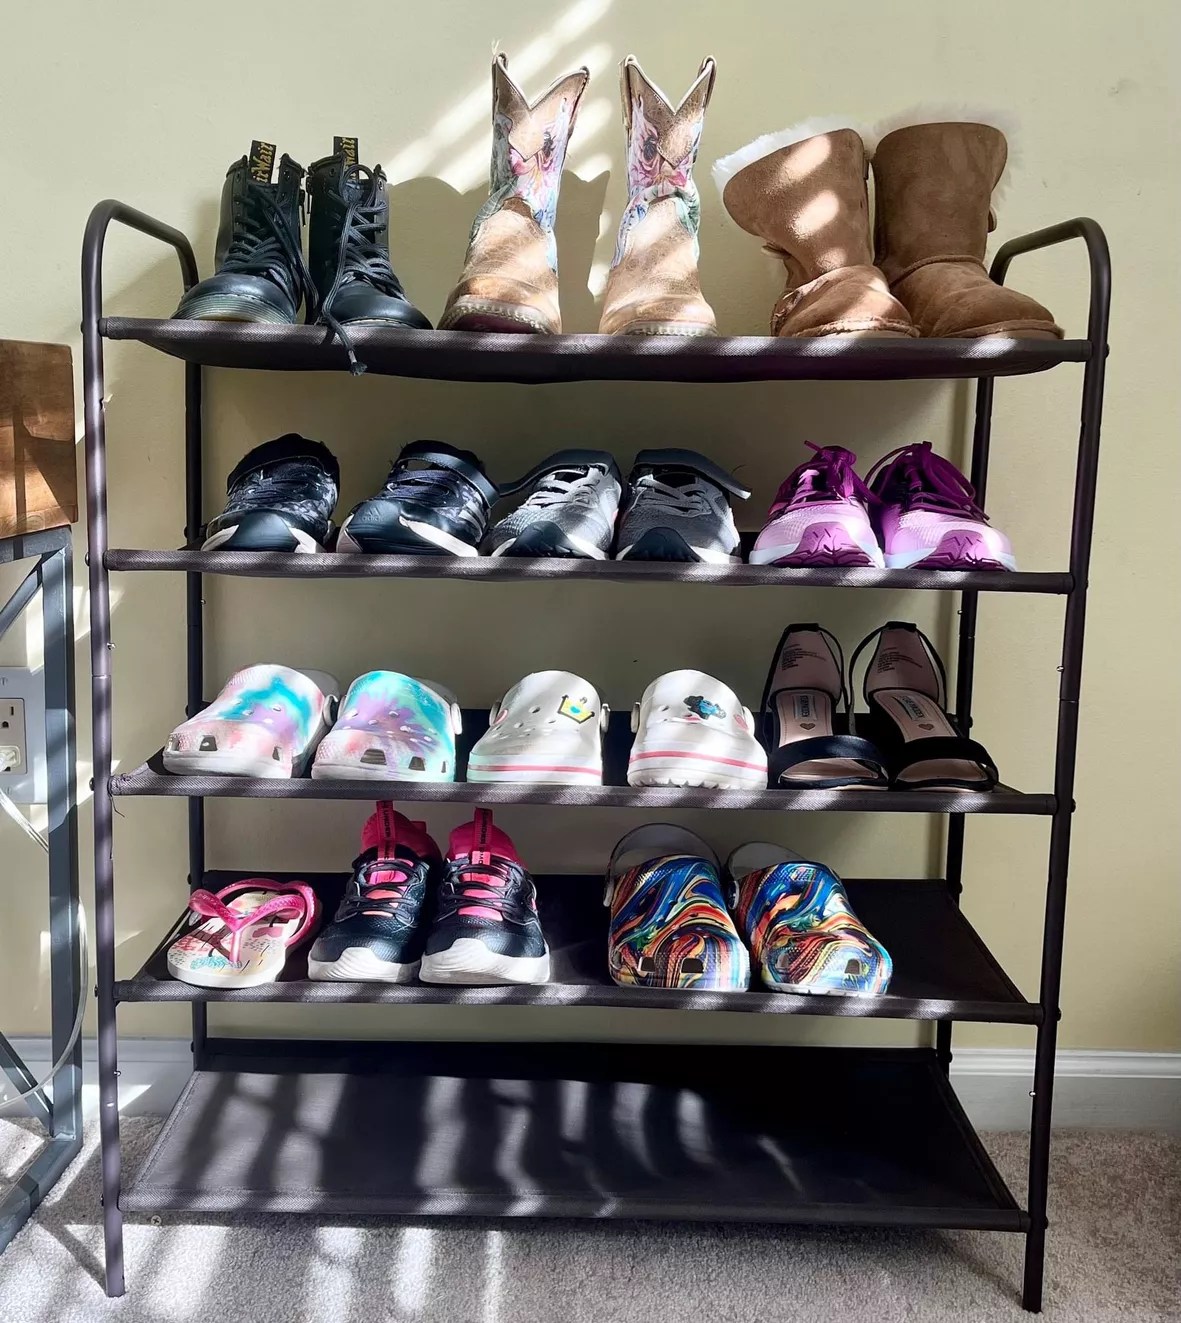 Simple Houseware 4-Tier Shoe Rack Storage Organizer Bronze